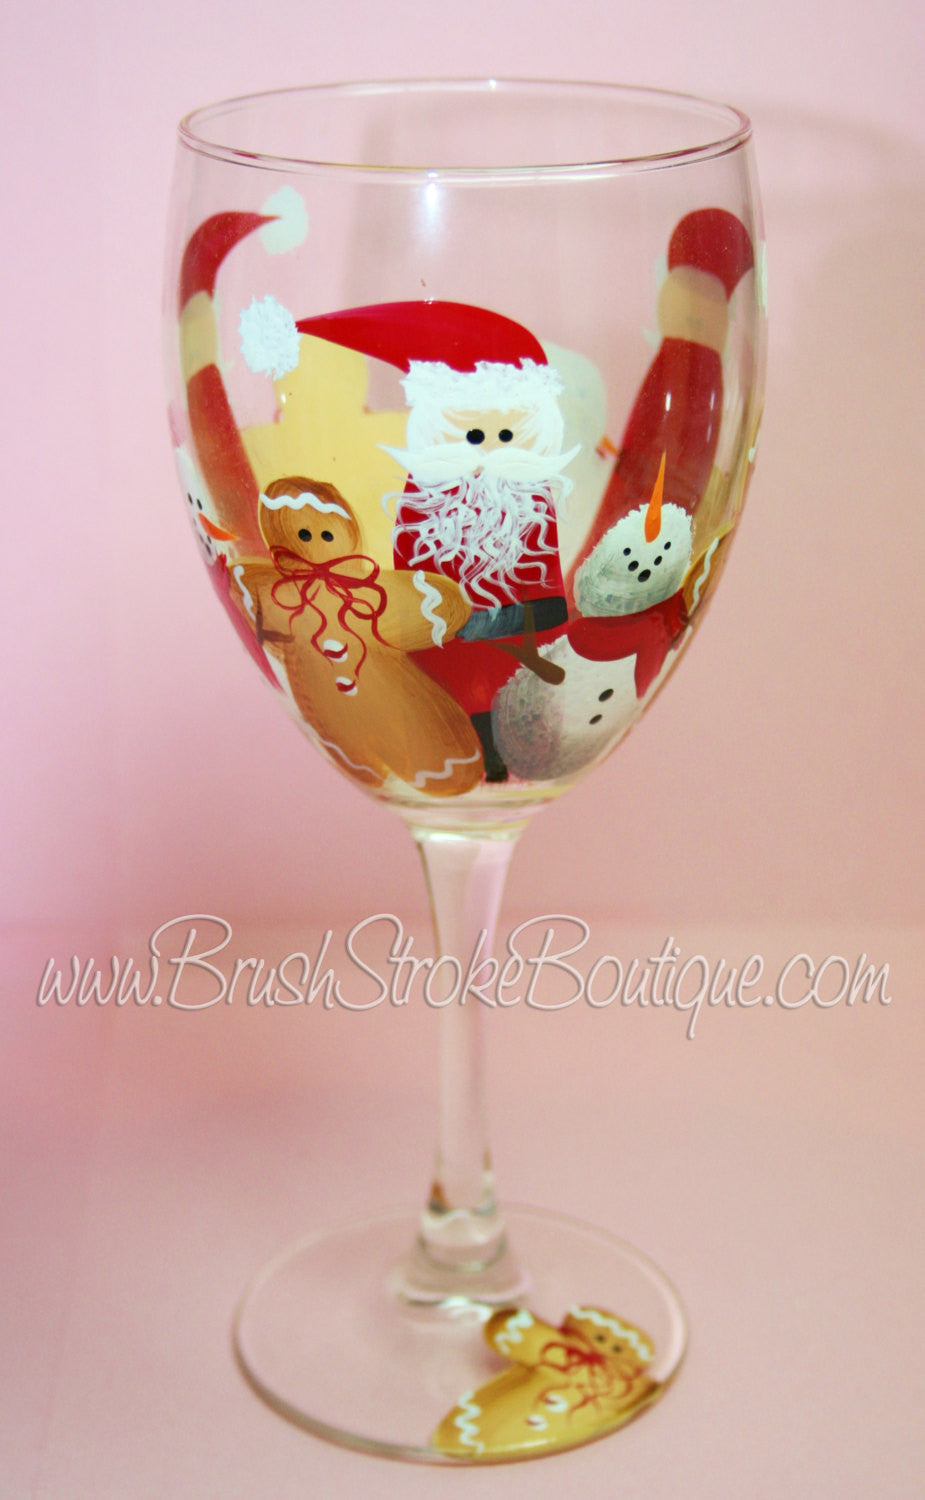 Hand Painted Wine Glass - Santas Crew - Original Designs by Cathy Kraemer